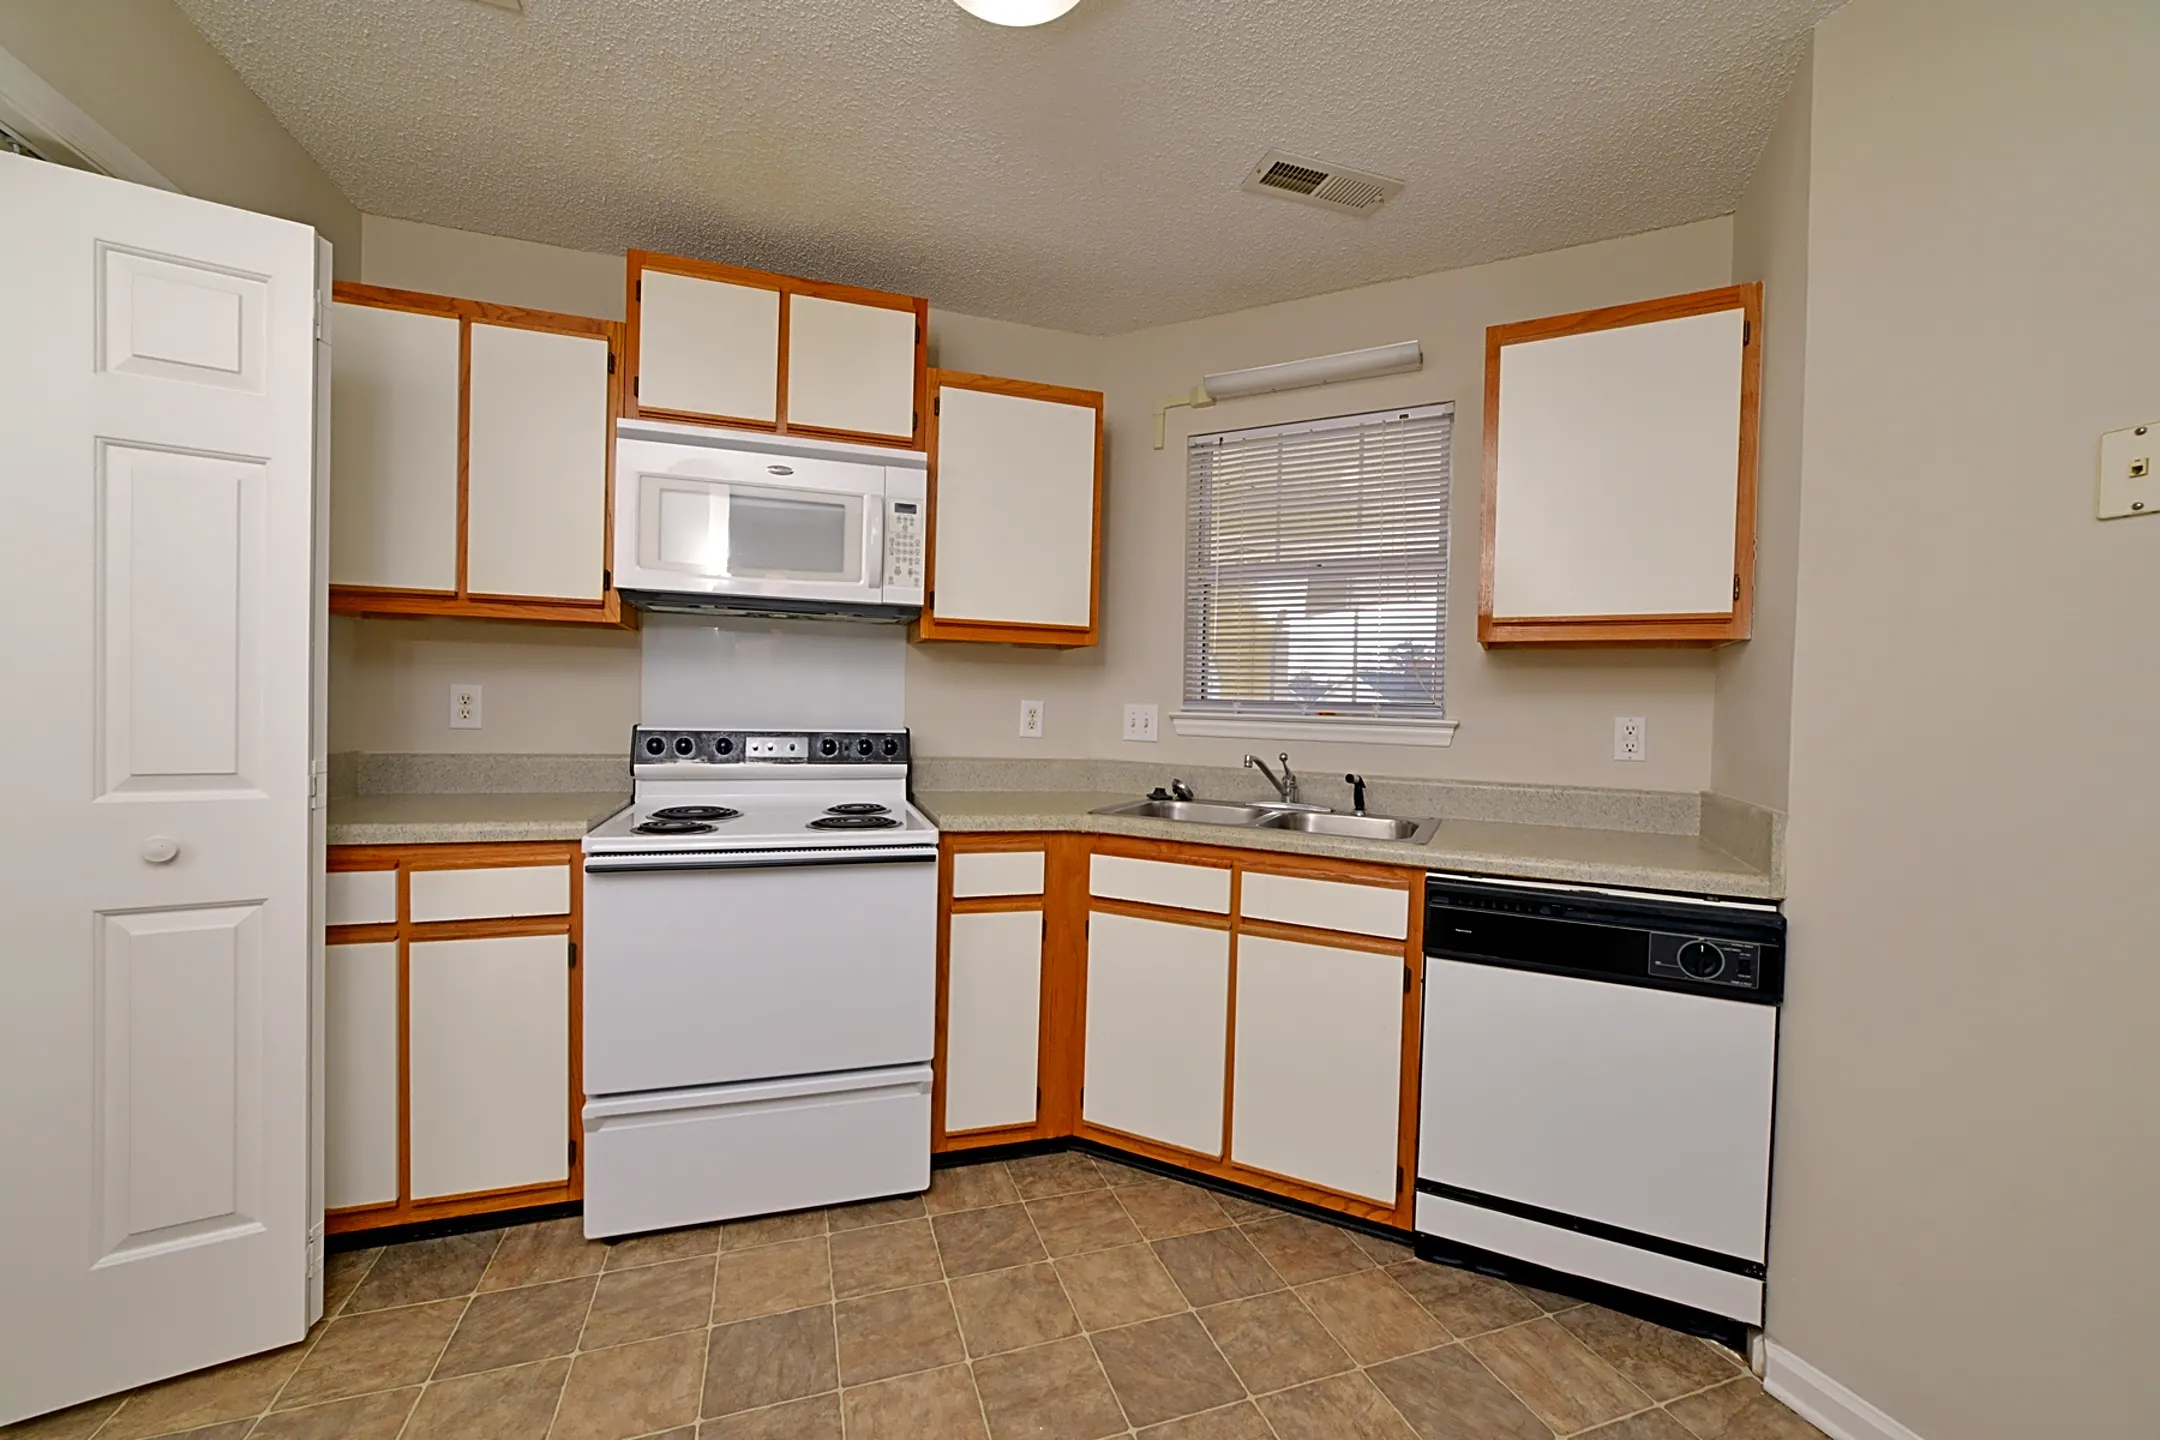 Kitchen - Meridian Park Apartments - Greenville, NC